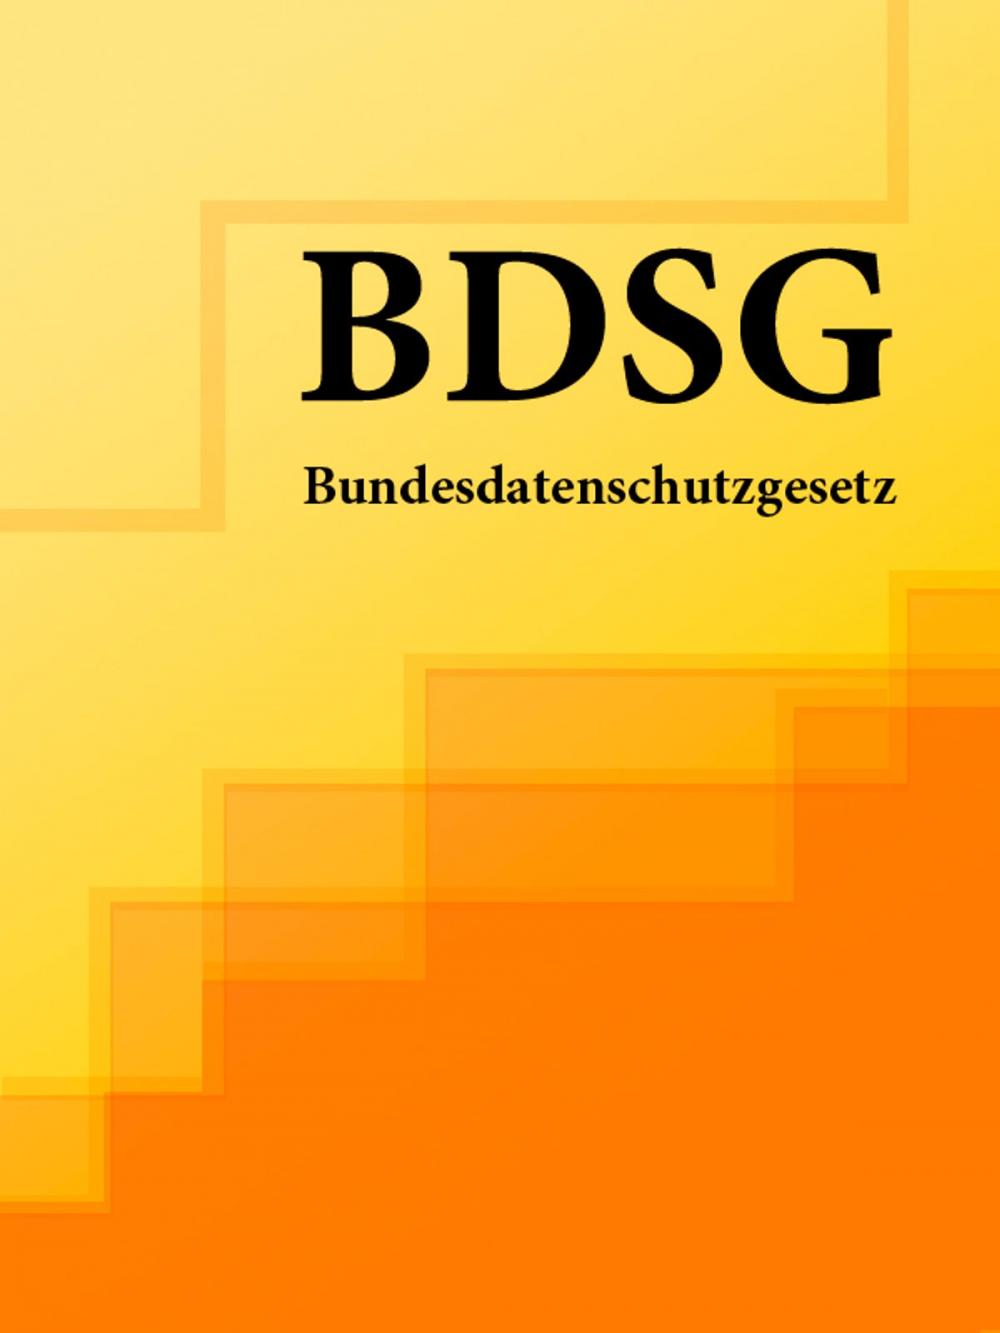 Big bigCover of Bundesdatenschutzgesetz - BDSG